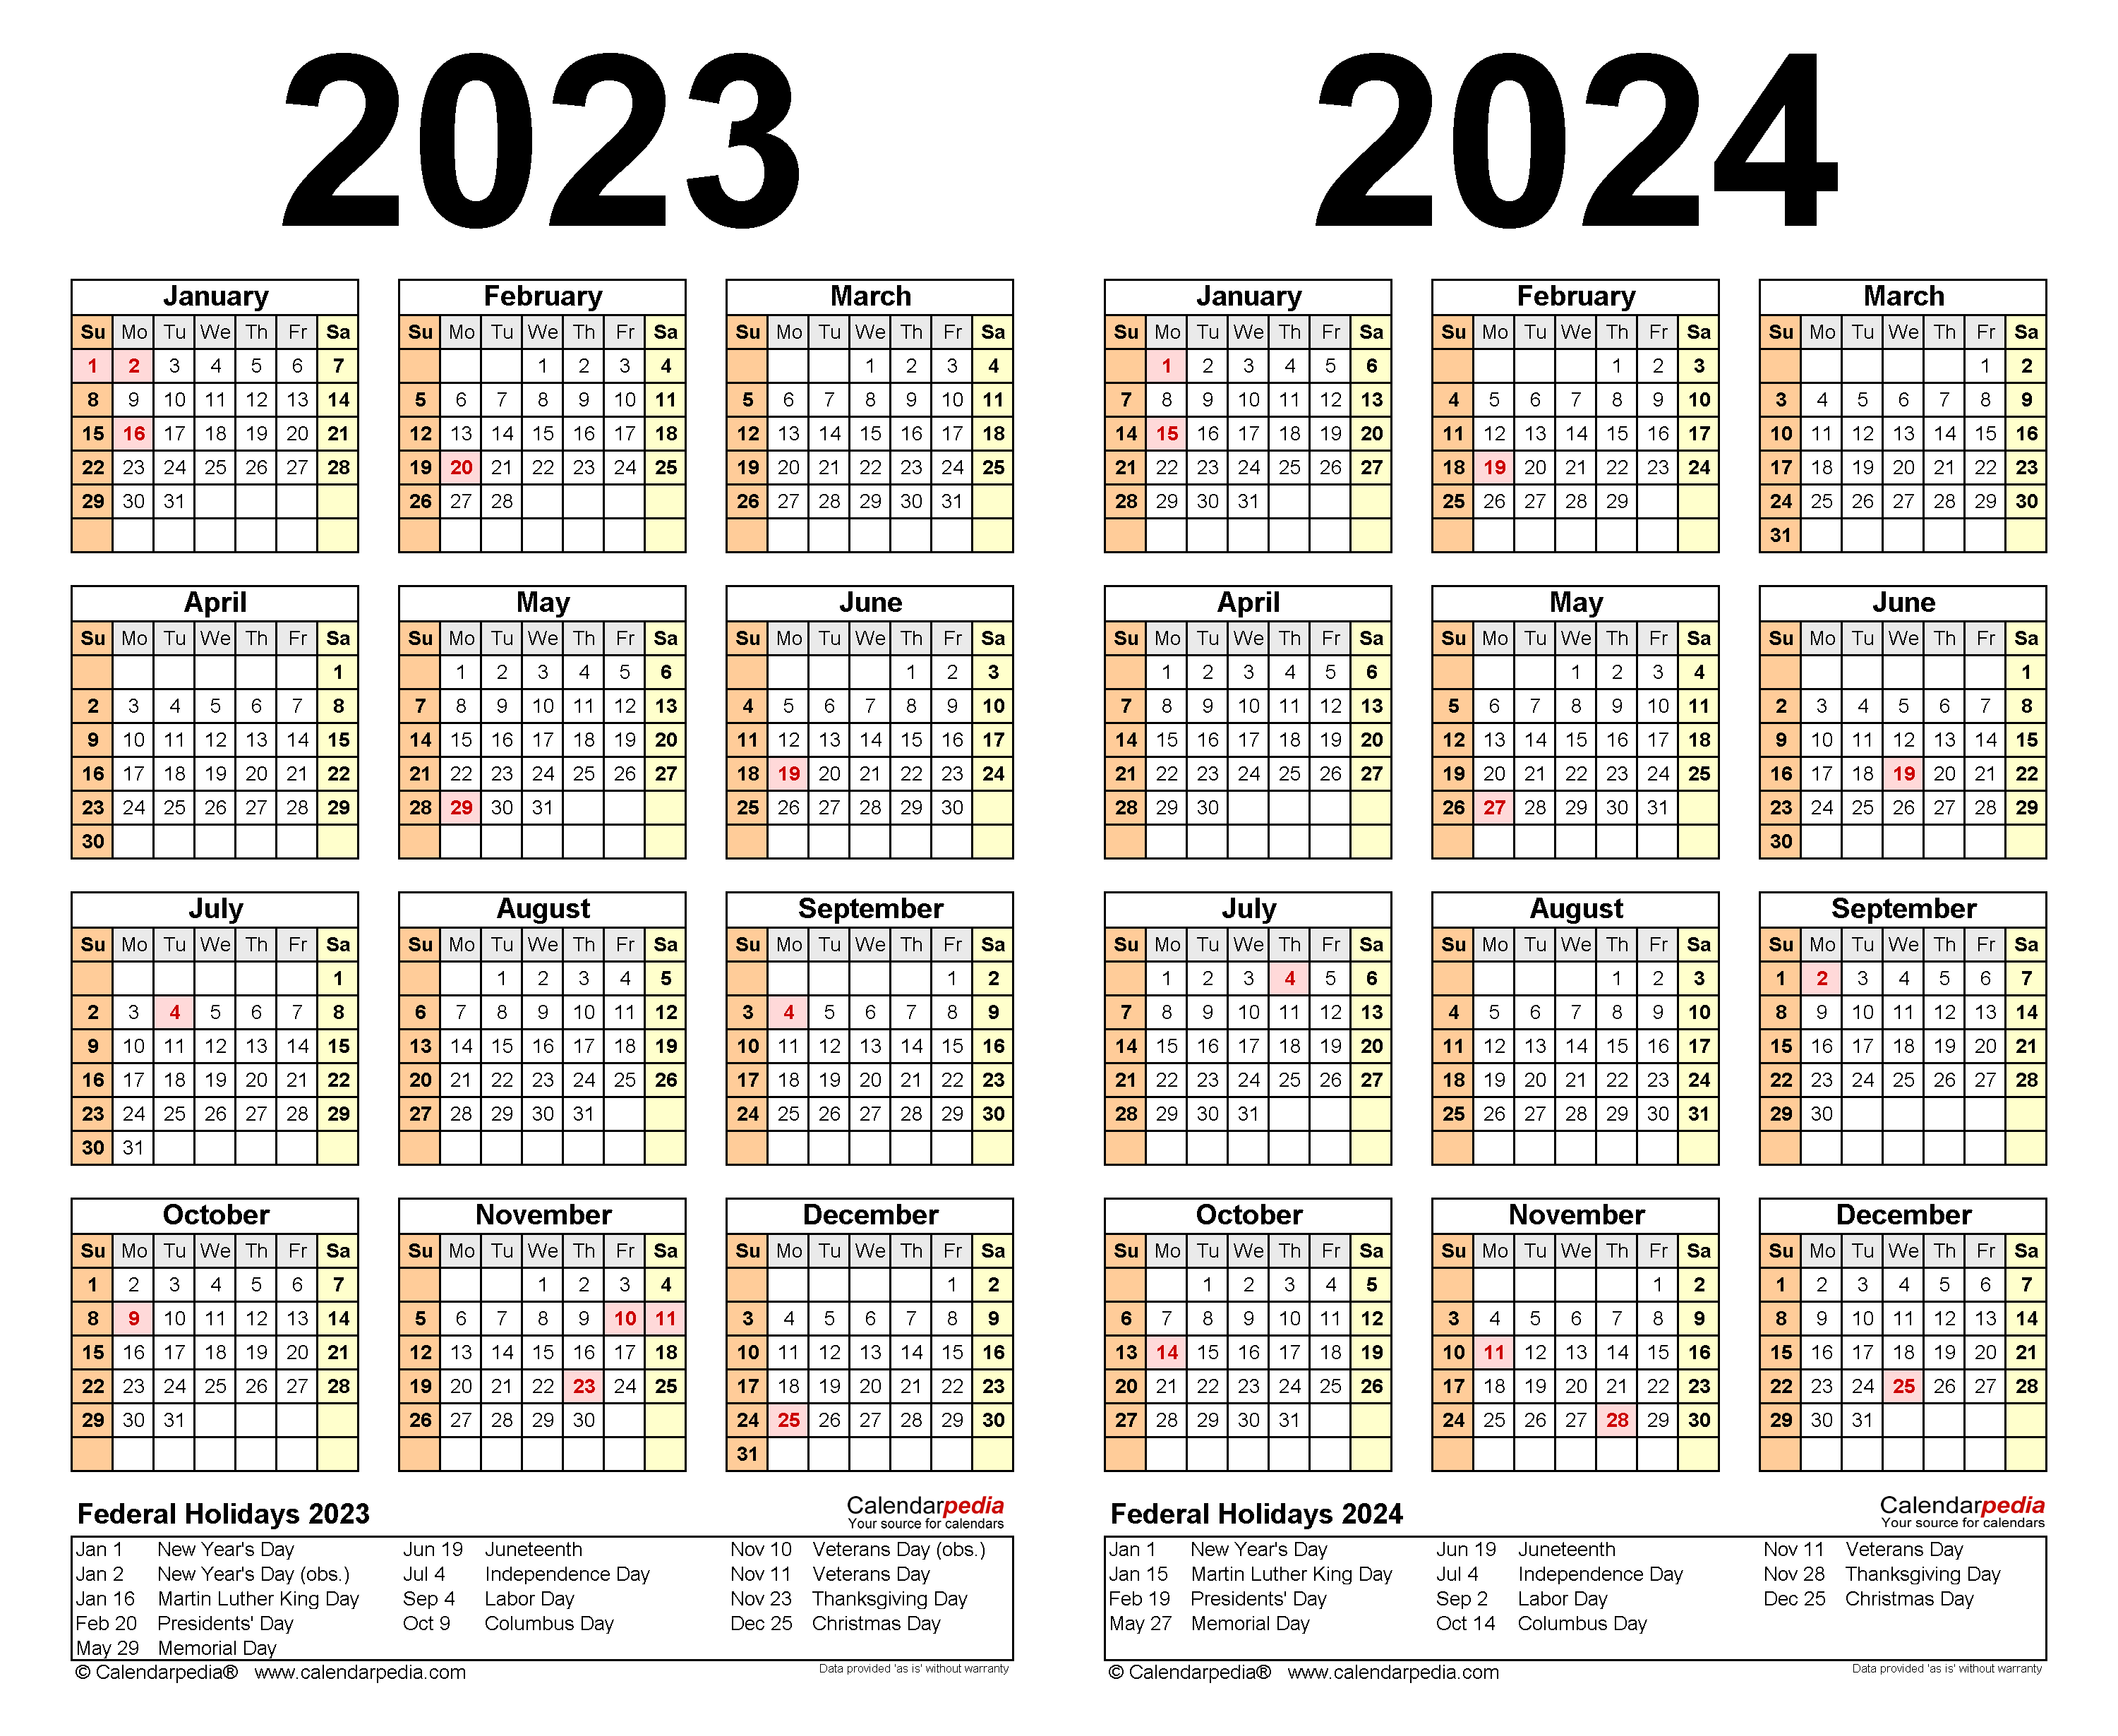 byu-2023-2024-calendar-captain-printable-calendars